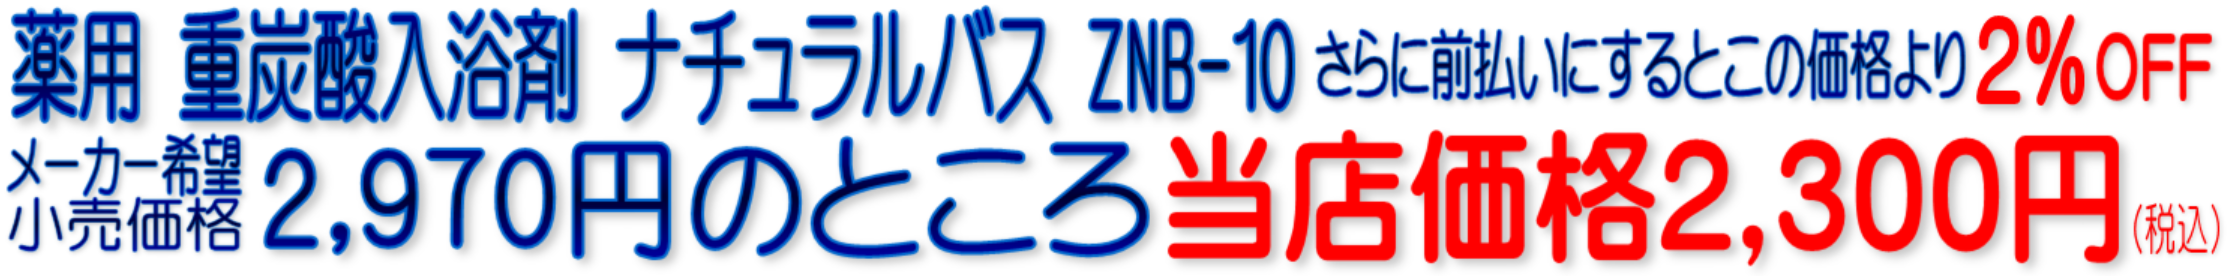 ZNB-10